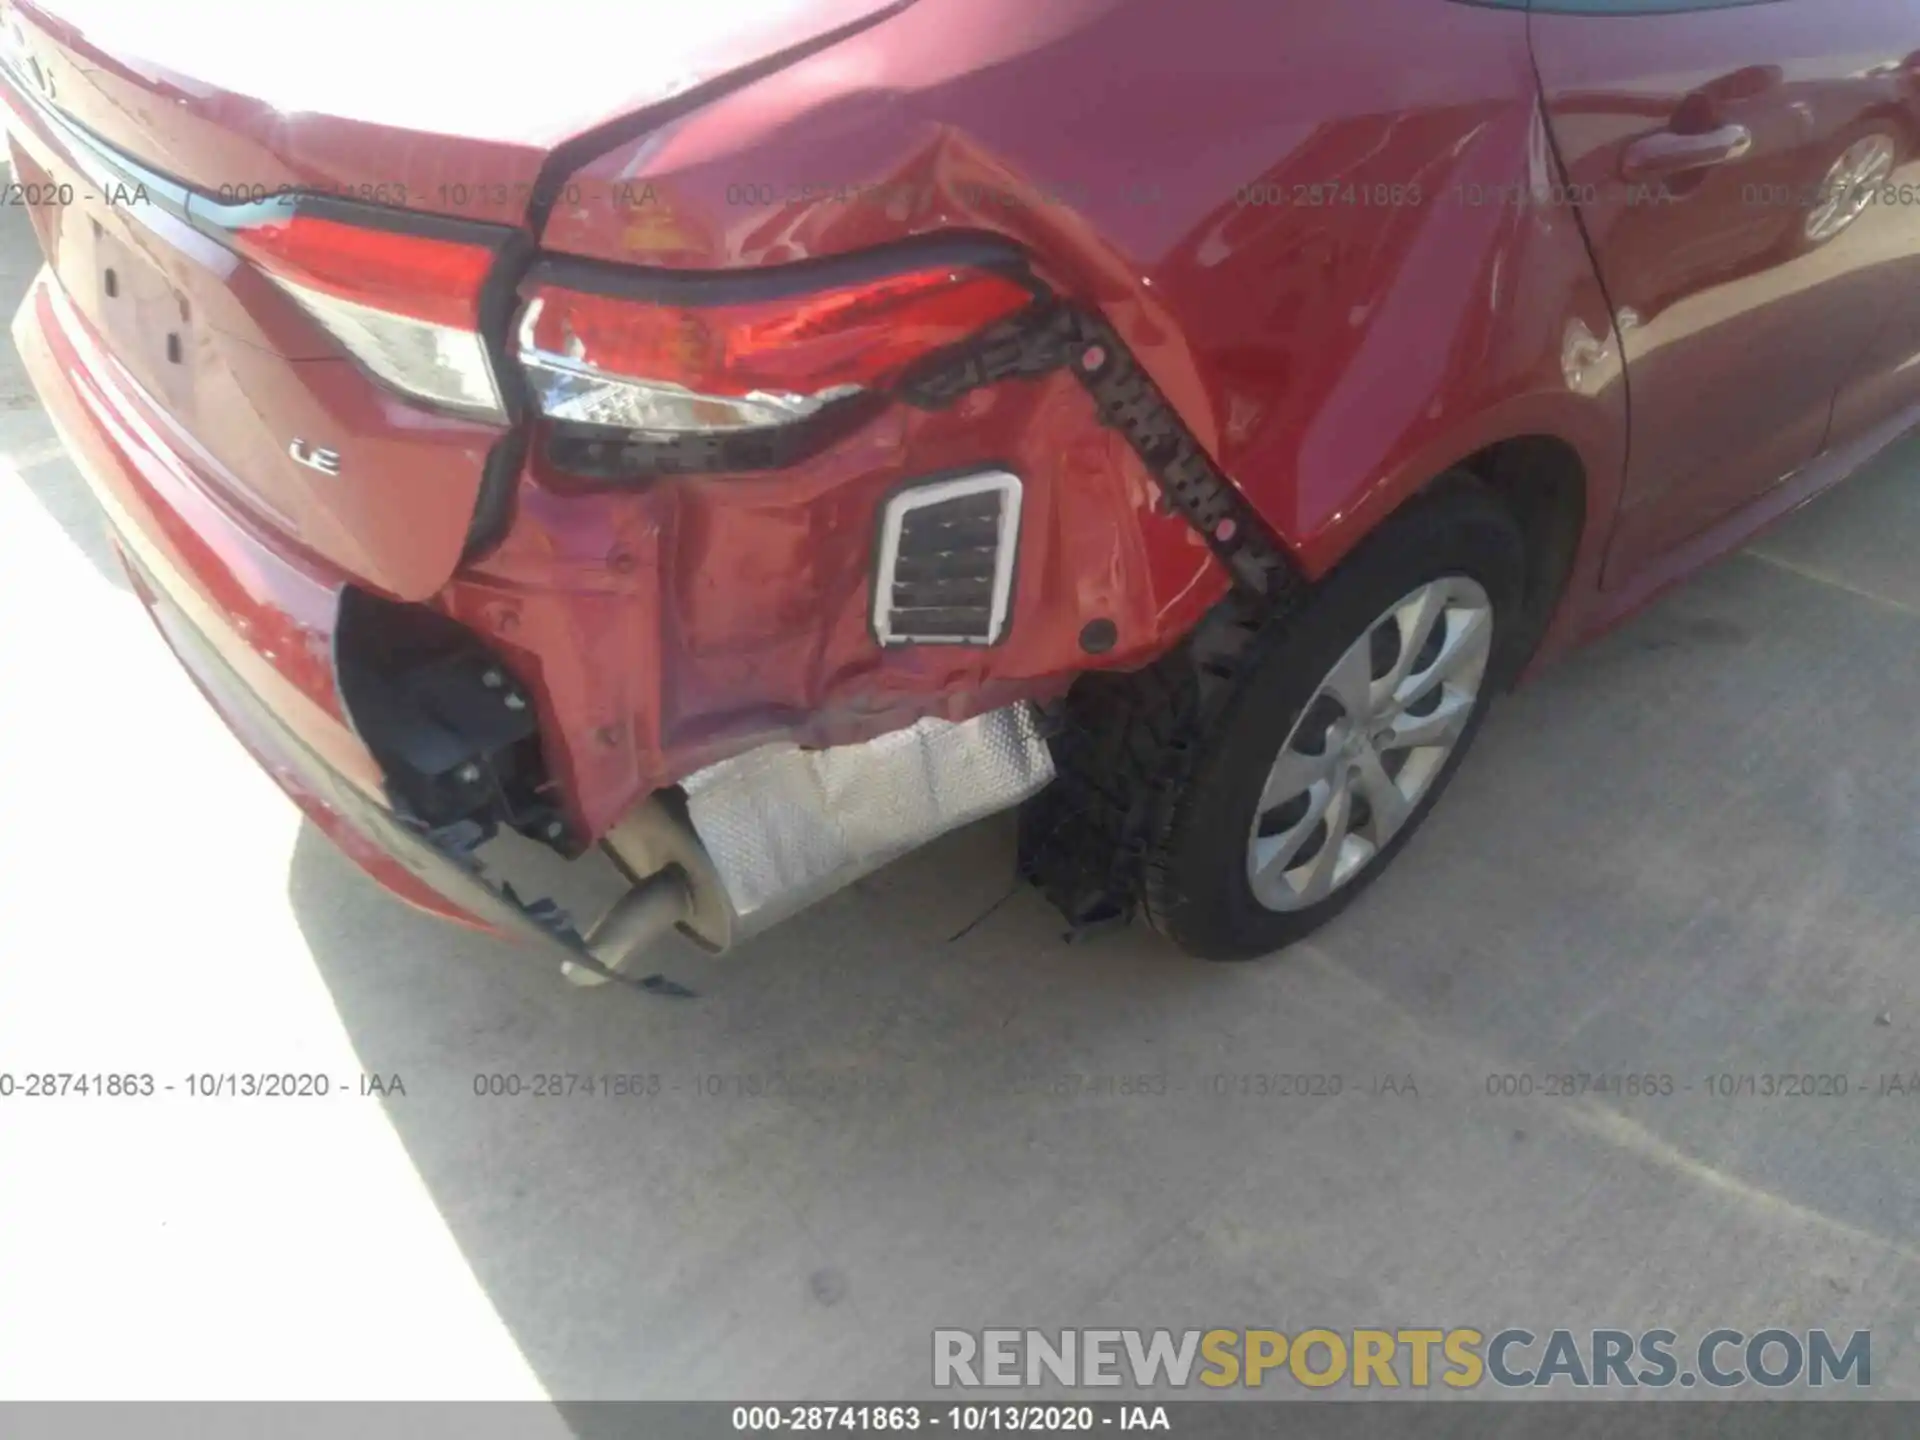 6 Photograph of a damaged car JTDEPRAEXLJ025924 TOYOTA COROLLA 2020